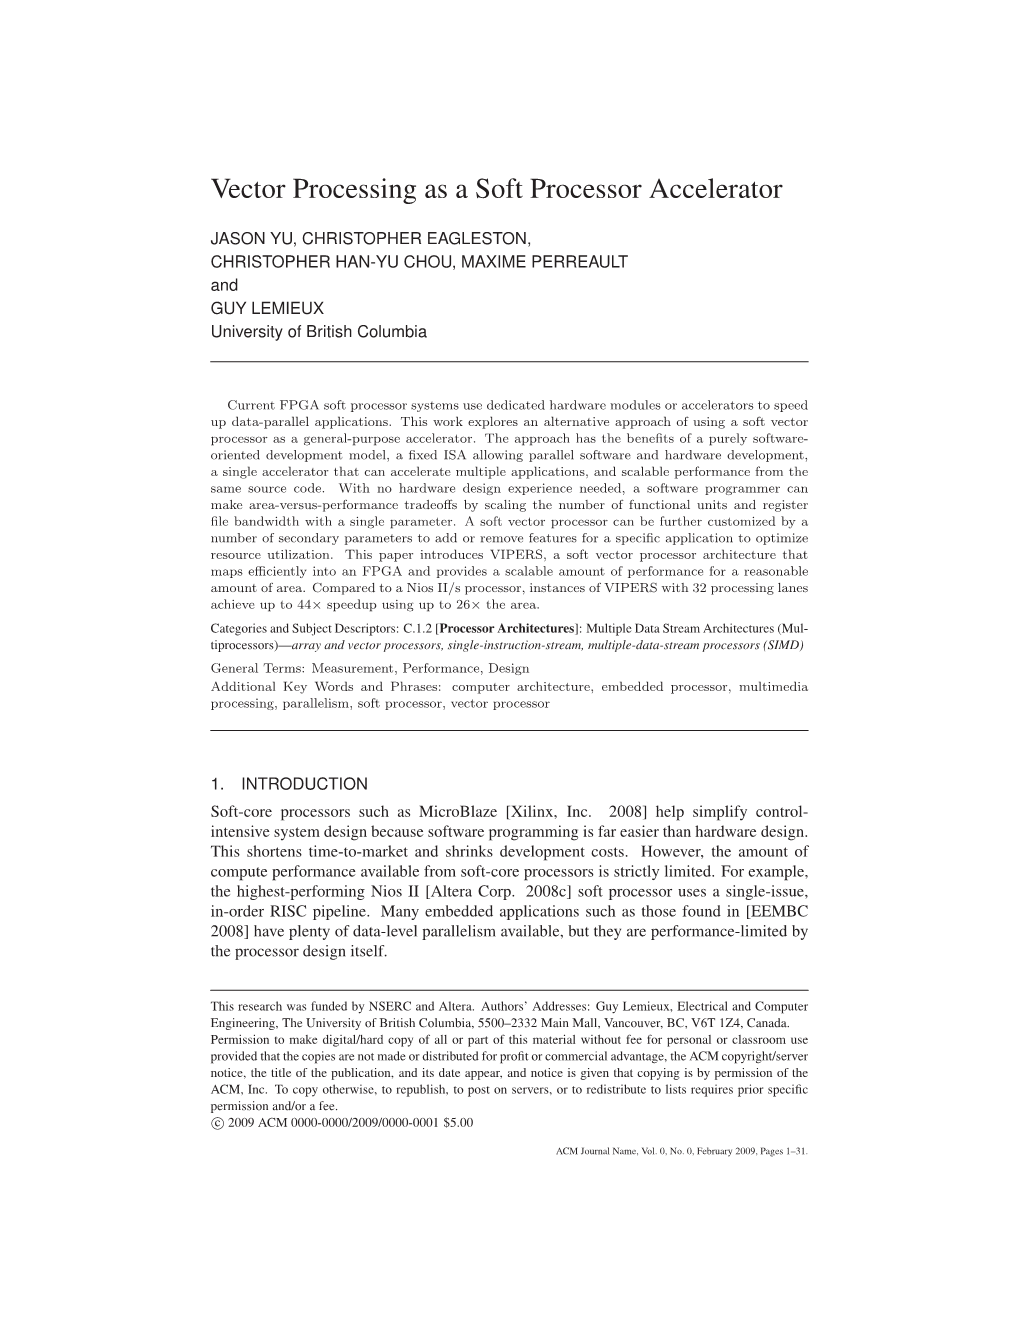 Vector Processing As a Soft Processor Accelerator